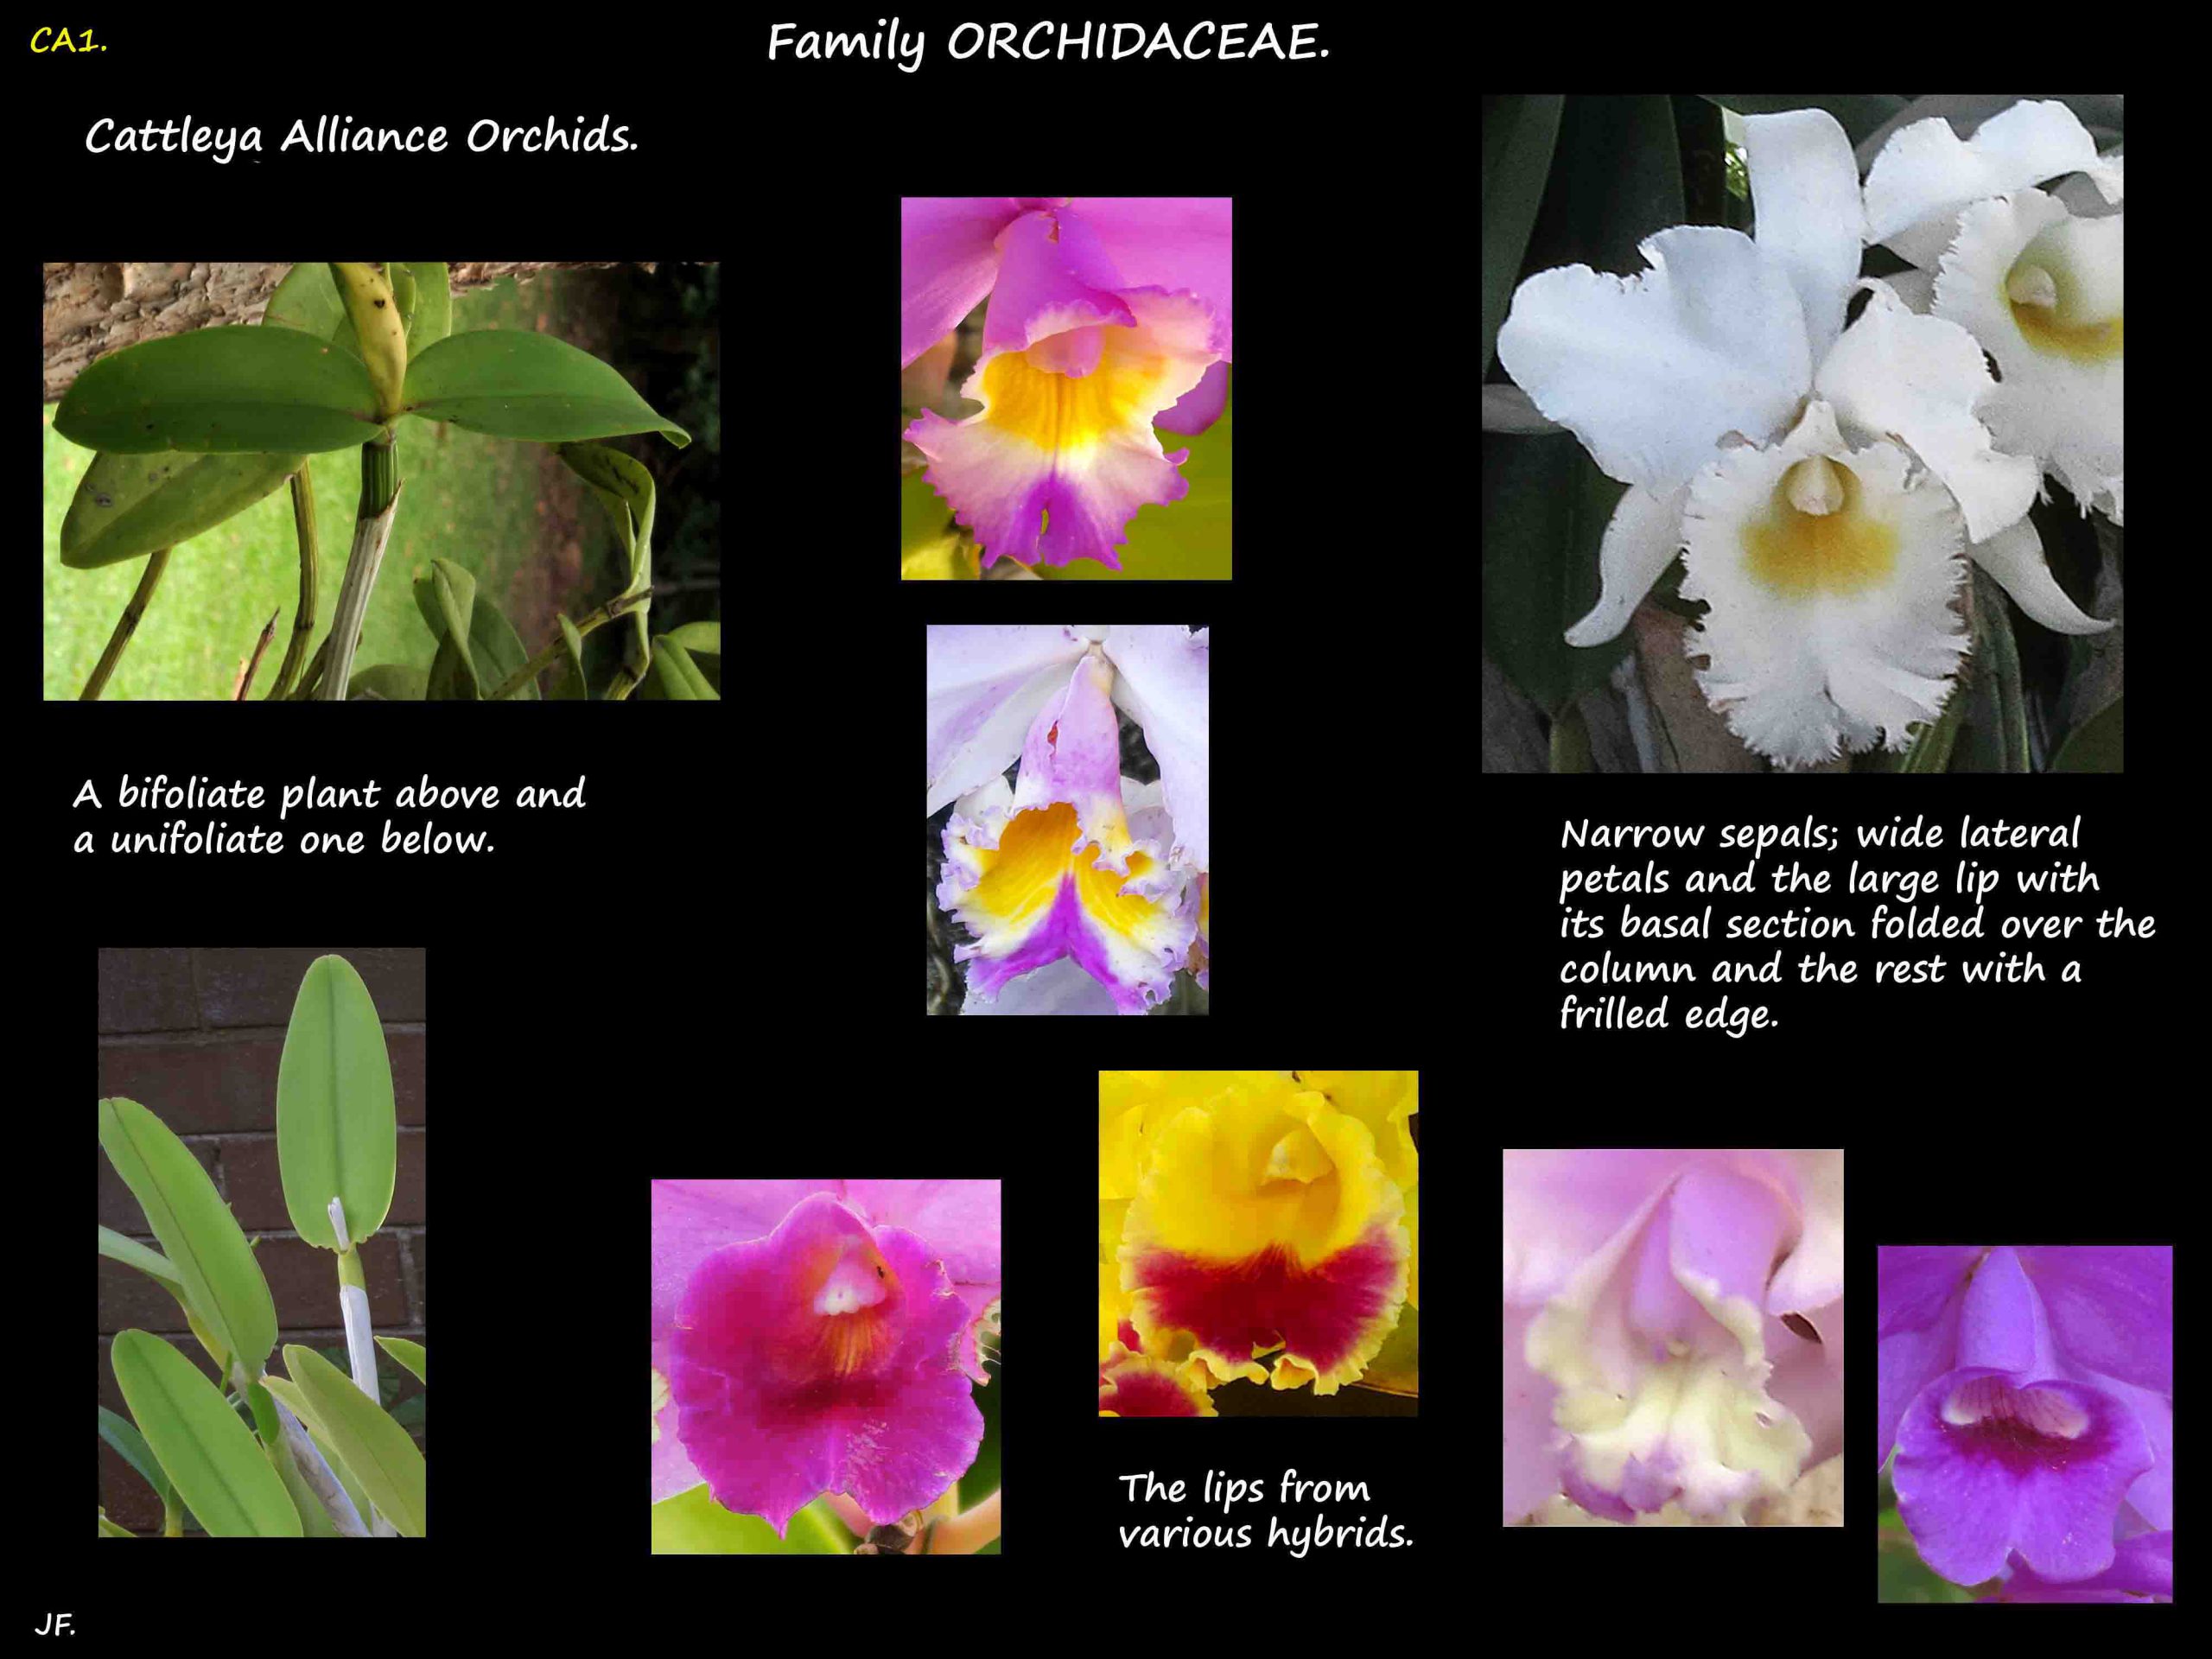 1 Cattleya Alliance orchids